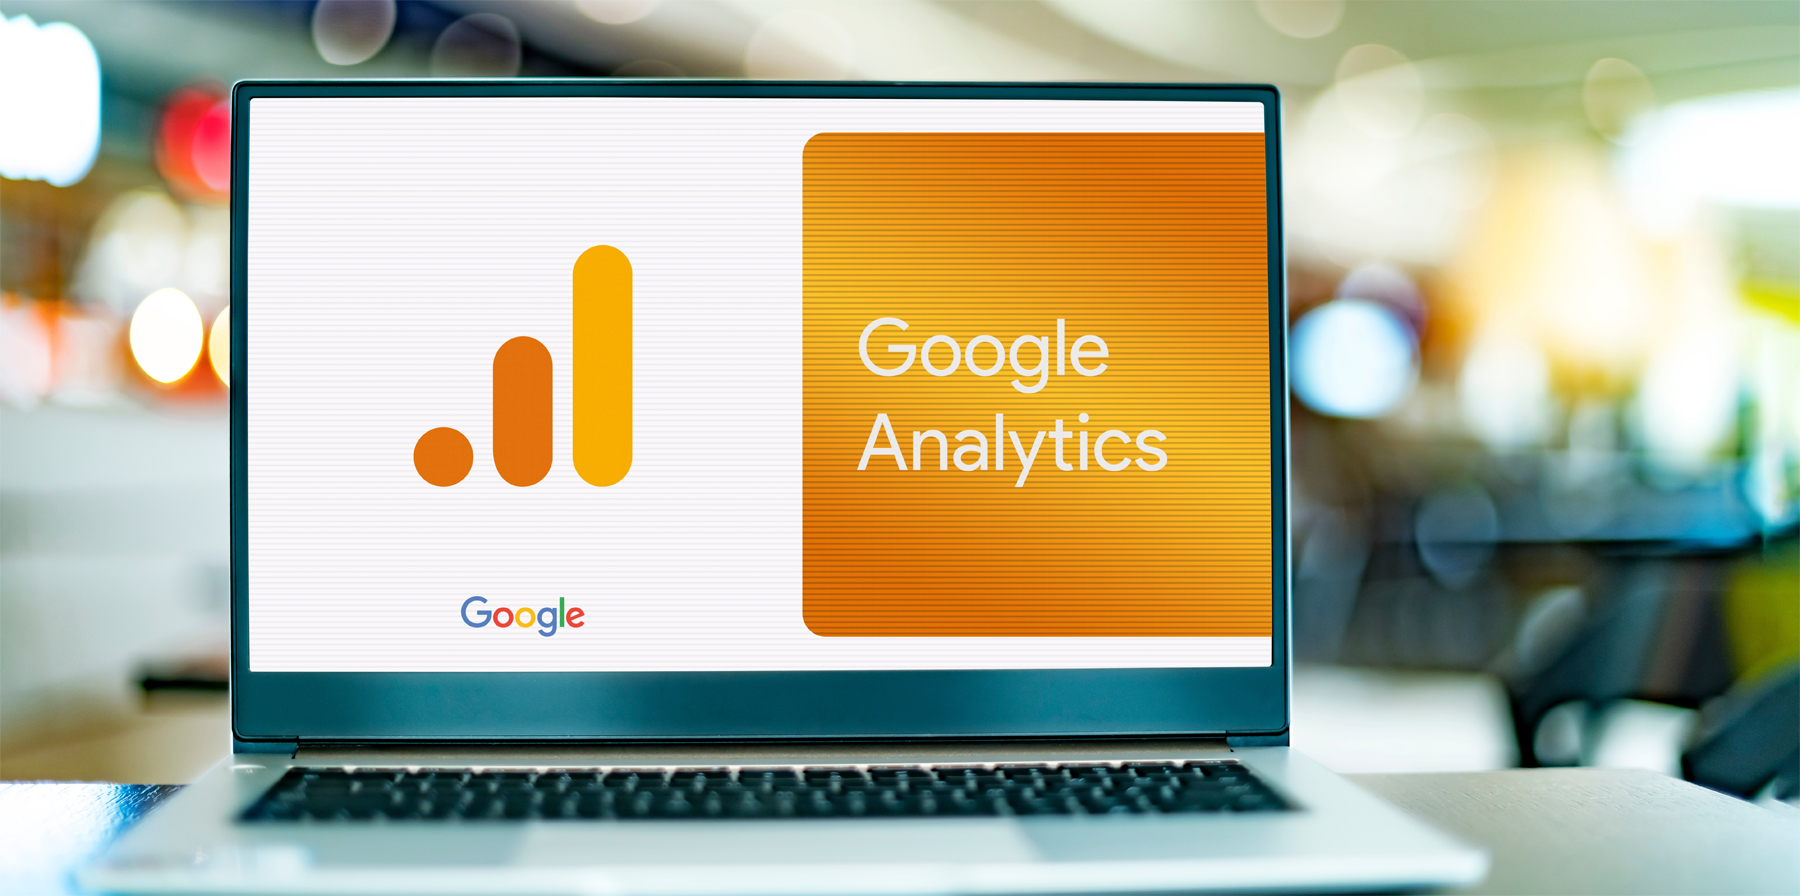 Google Analytics 4 Being Used Online